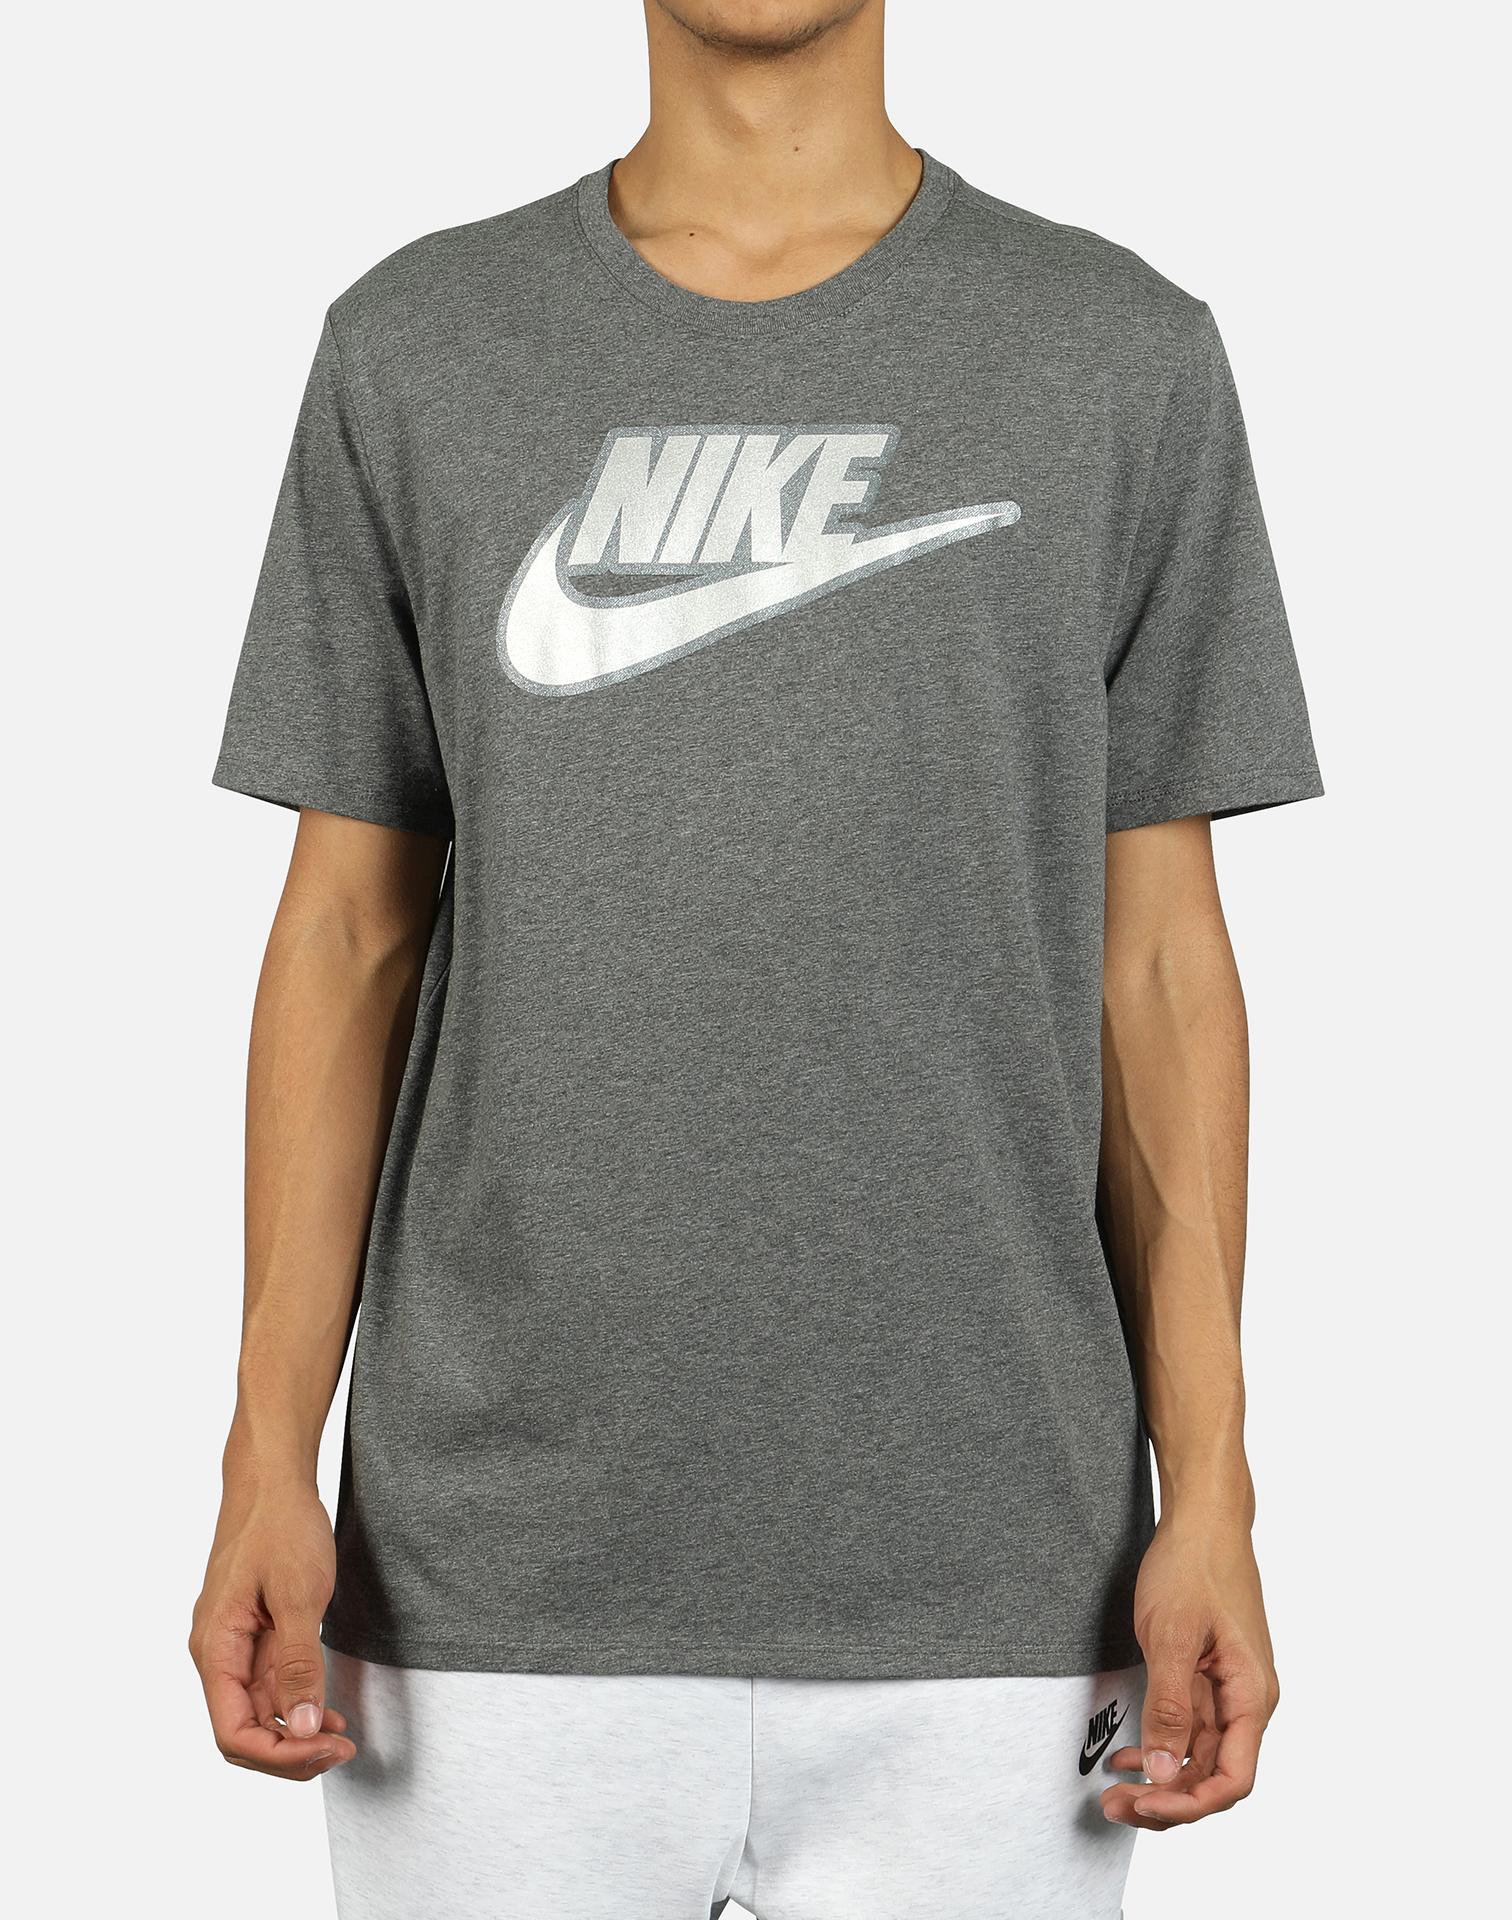 Nike Cotton Nsw Logo Tee in Grey (Gray) for Men - Lyst